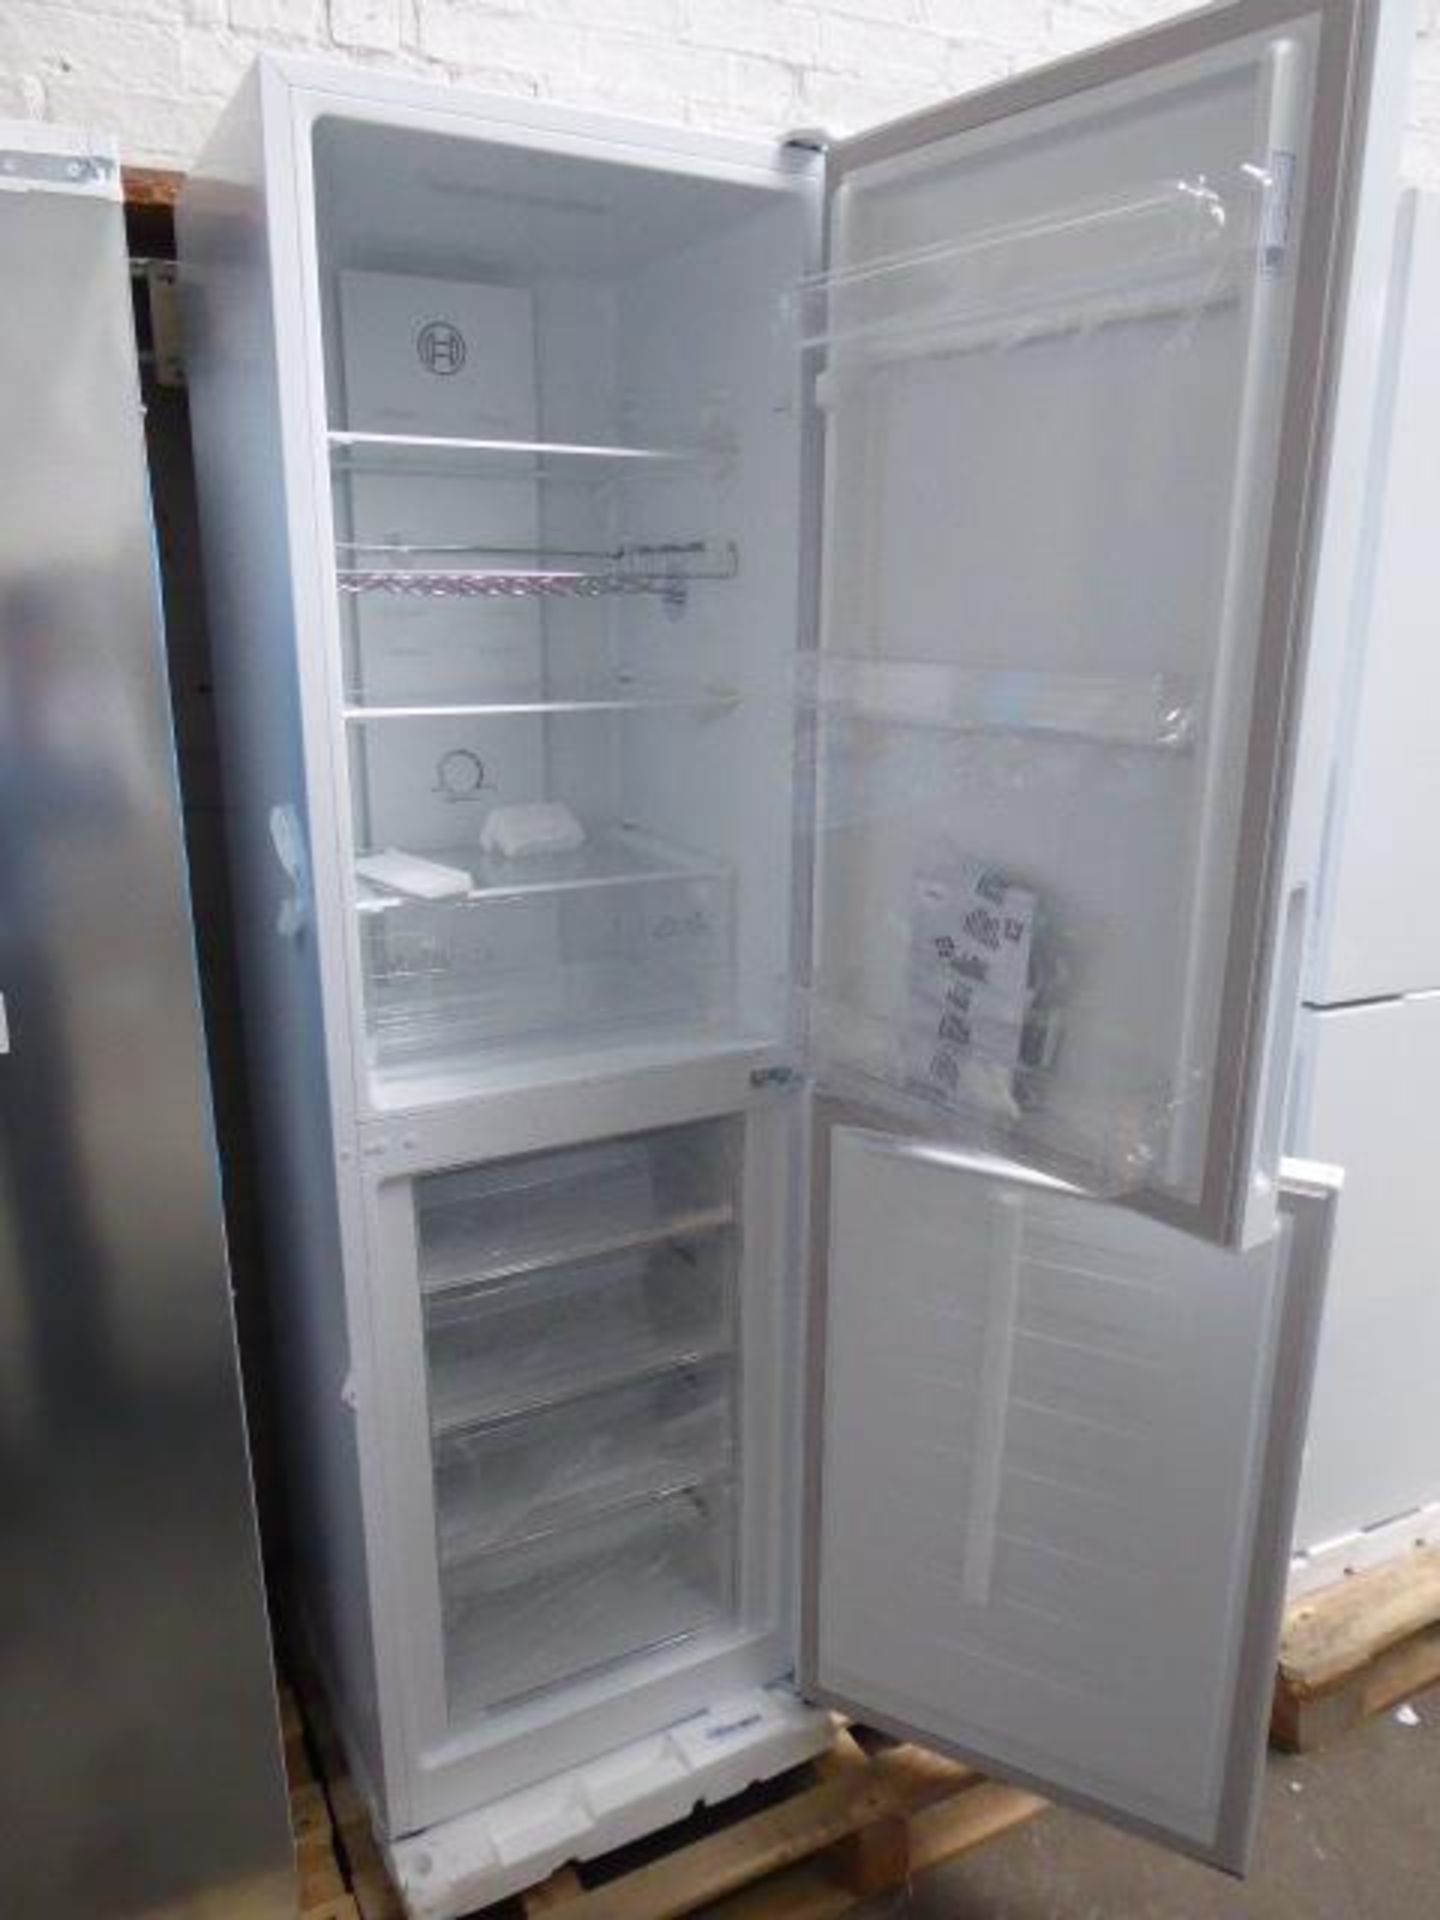 KGN27NWFAGB Bosch Free-standing fridge-freezer - Image 2 of 2